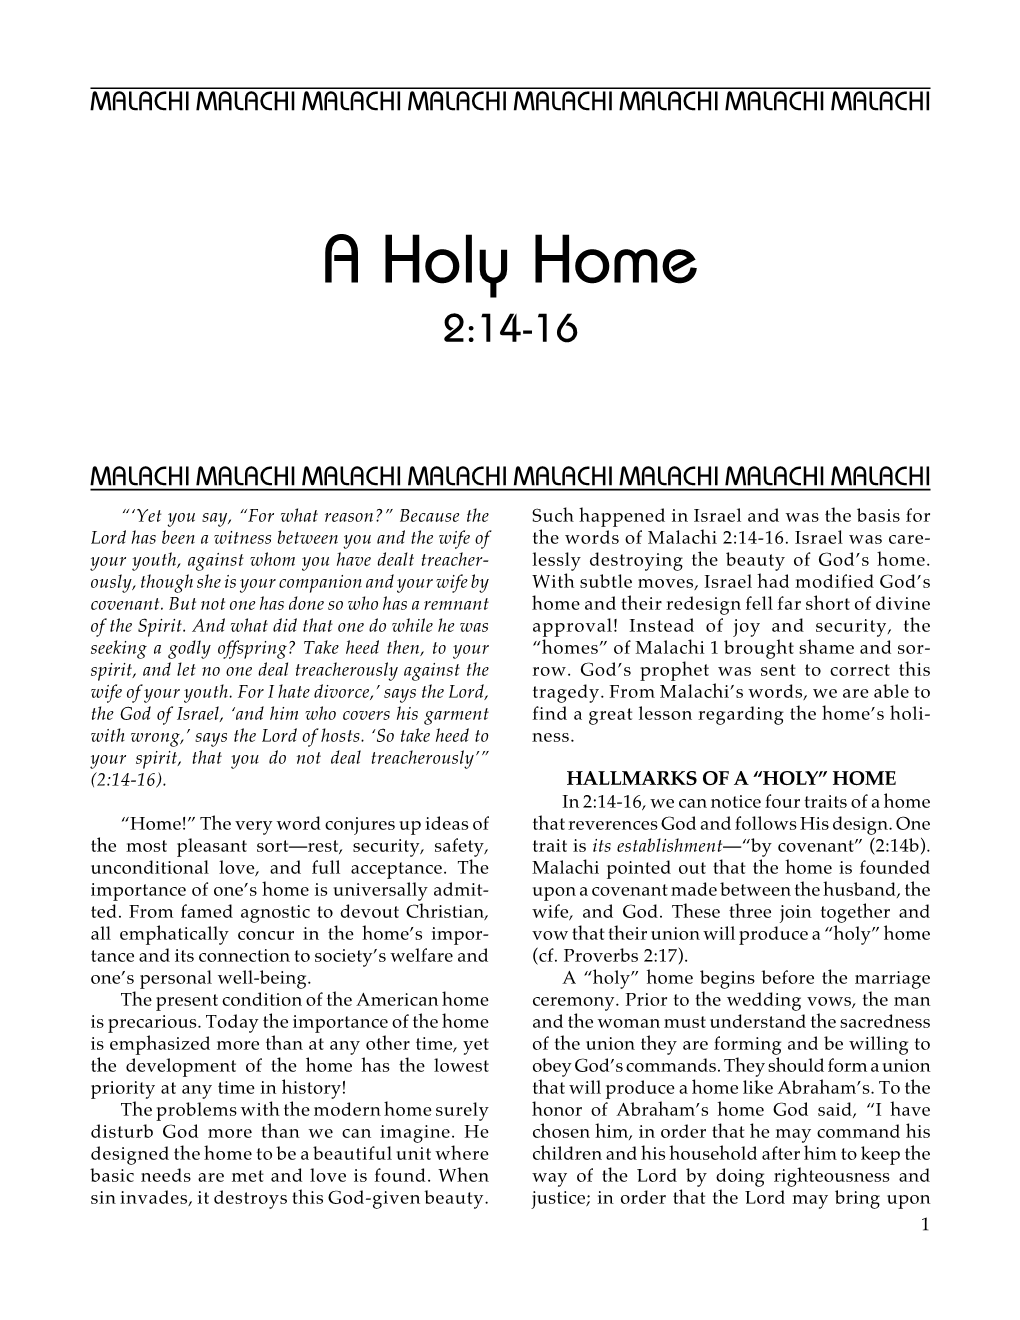 A Holy Home (Malachi 2:14-16)